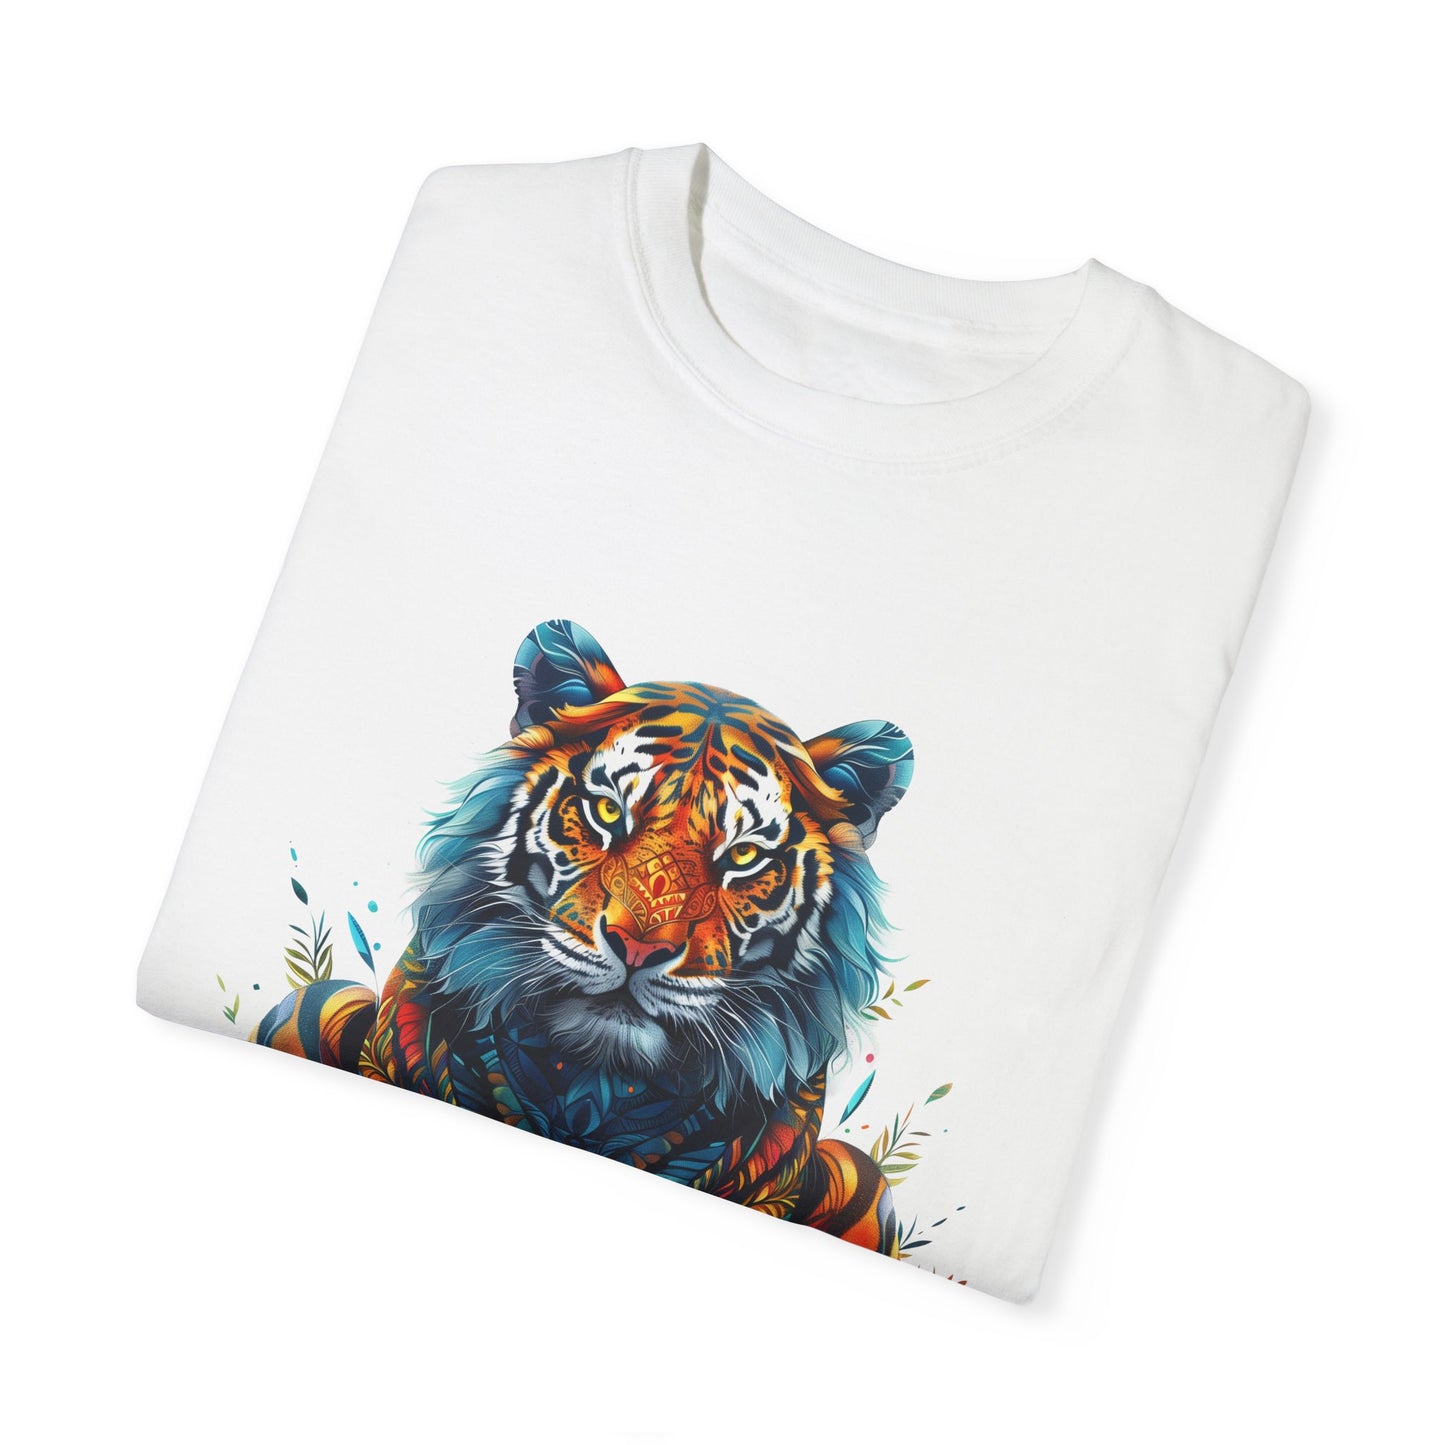 Lion Head Cool Graphic Design Novelty Unisex Garment-dyed T-shirt Cotton Funny Humorous Graphic Soft Premium Unisex Men Women White T-shirt Birthday Gift-23